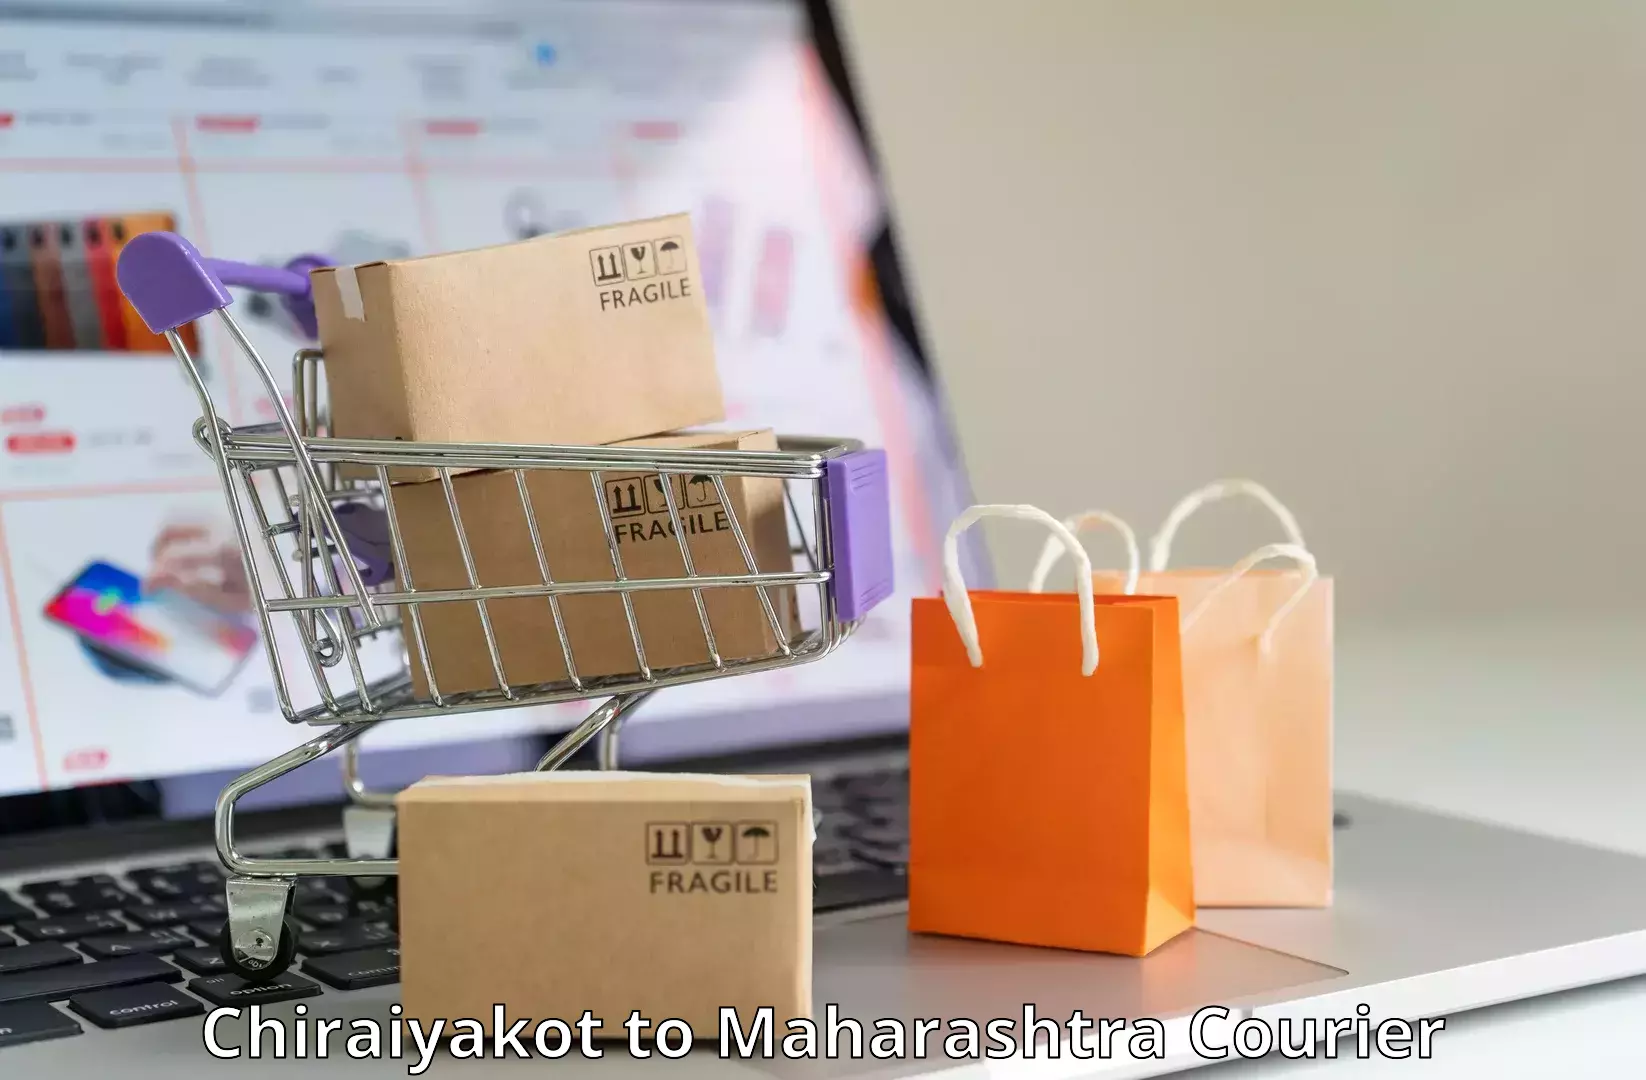 Sustainable delivery practices Chiraiyakot to Maharashtra